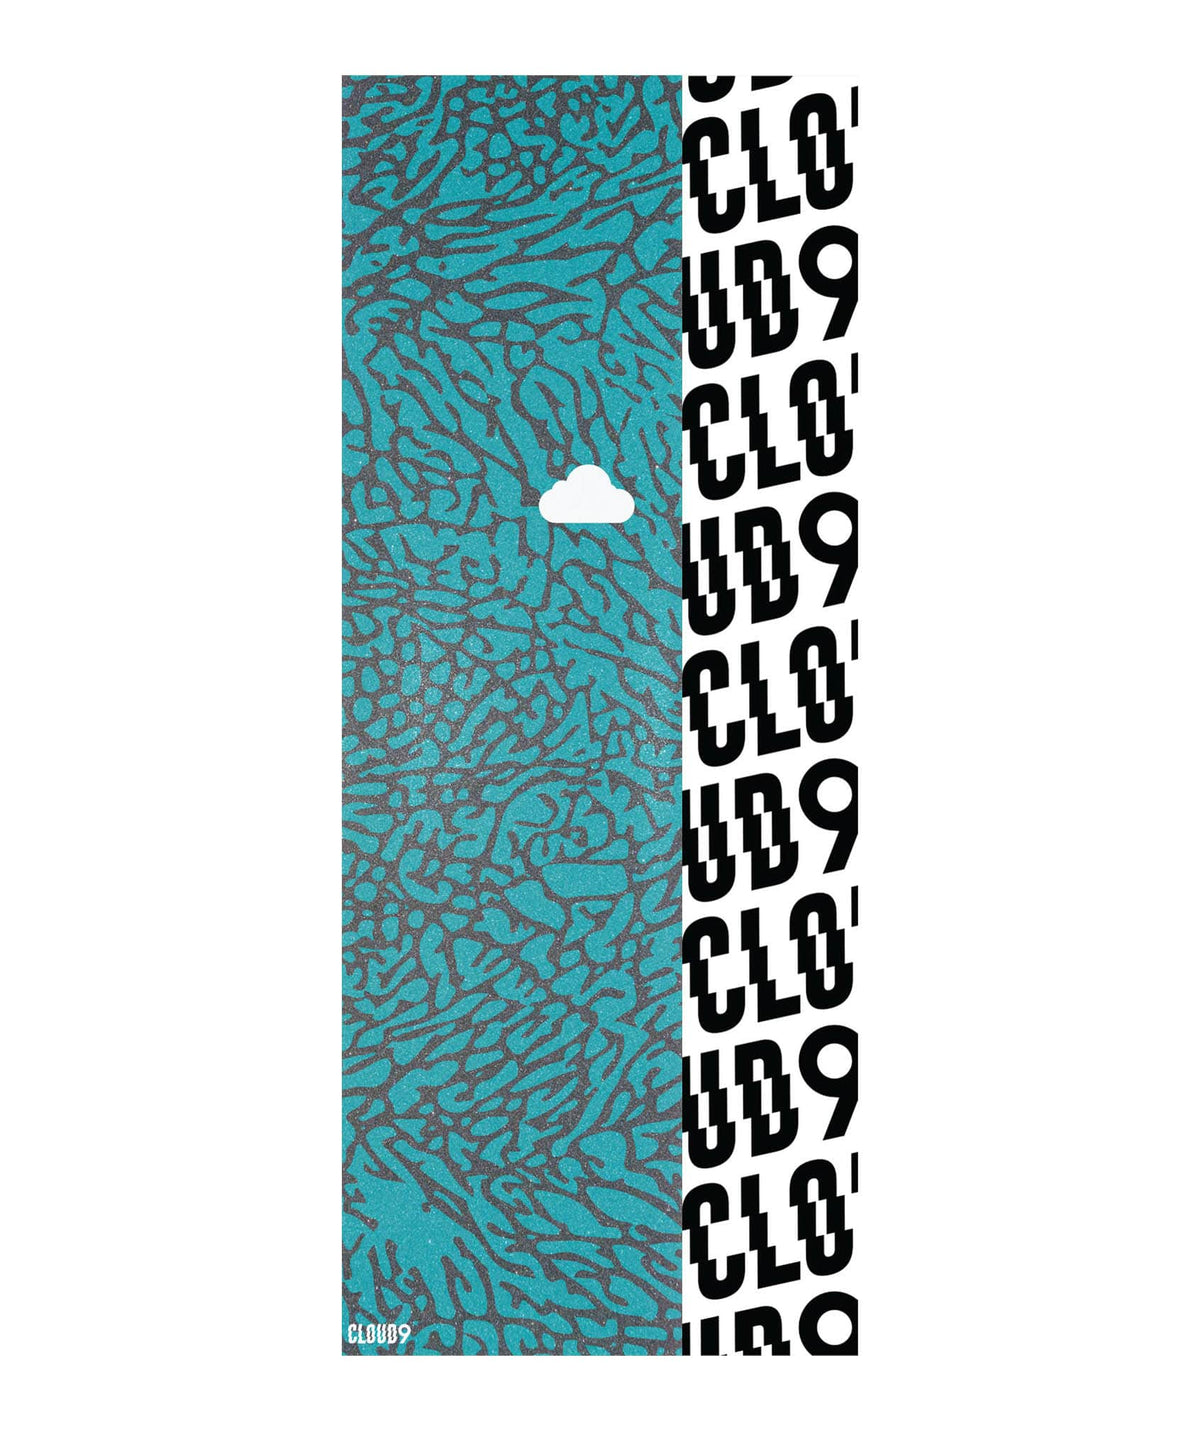 Cloud 9 Elephant Print Grip Tape - Image 1